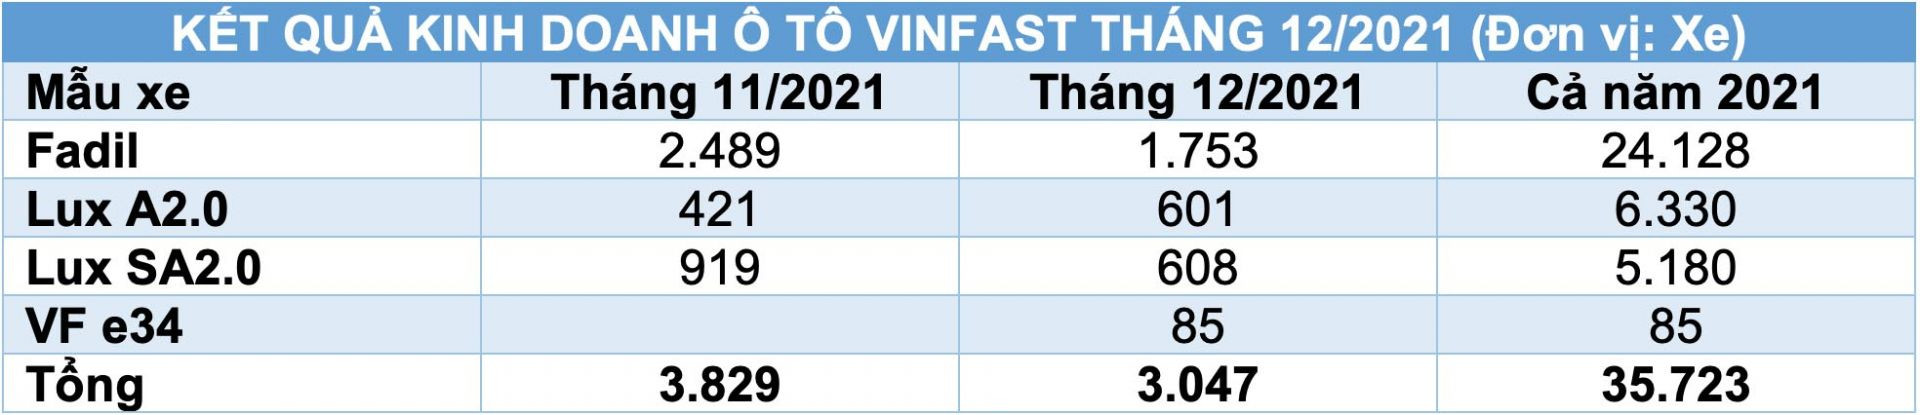 Doanh số xe VinFast trong năm 2021